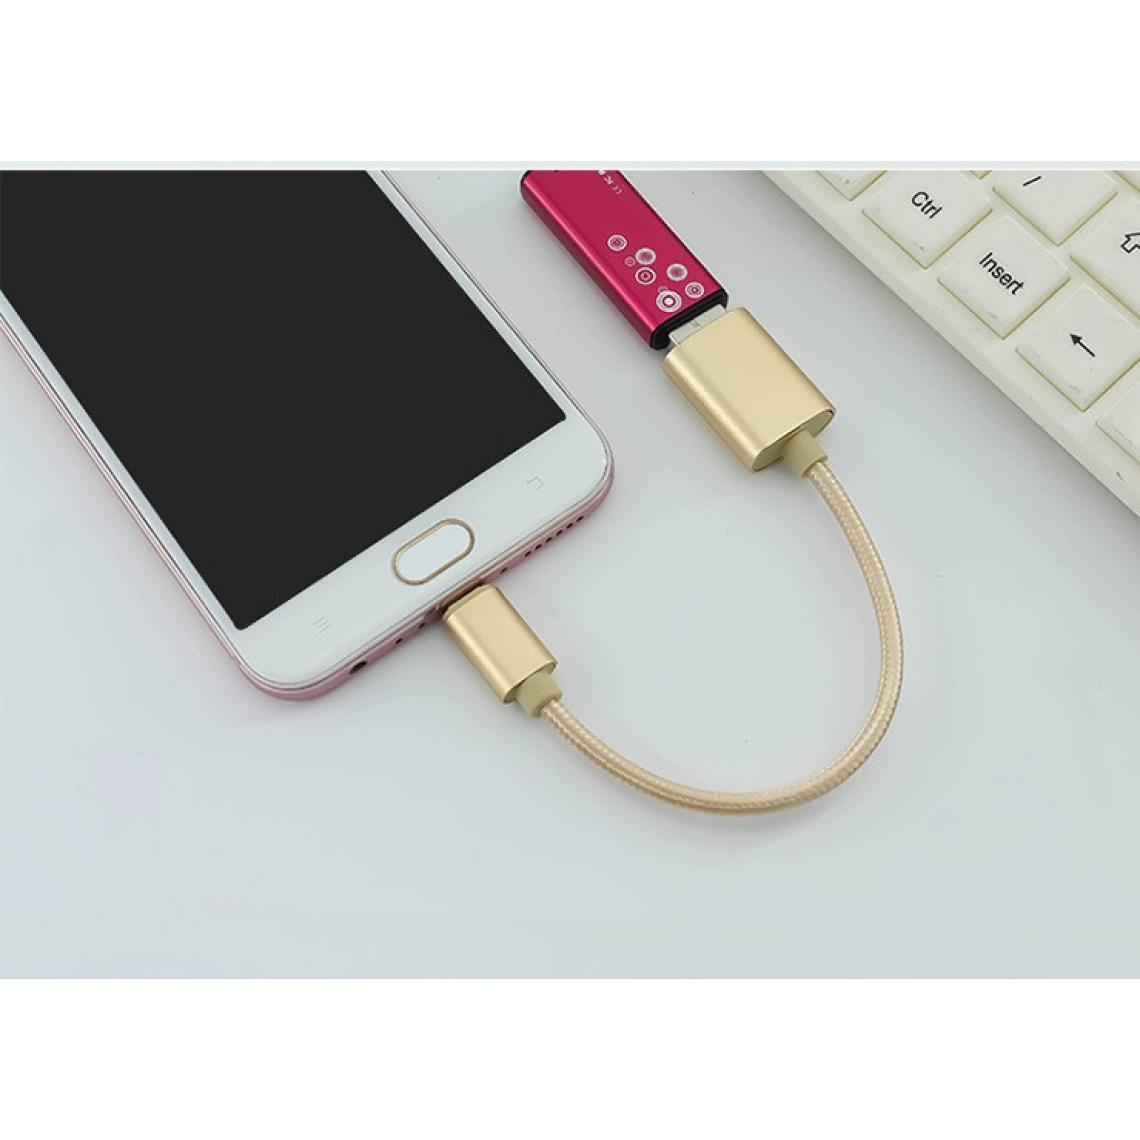 Shot - Adaptateur Type C/USB pour SAMSUNG Galaxy Note 10 Lite Smartphone & MAC USB-C Clef (OR) - Autres accessoires smartphone